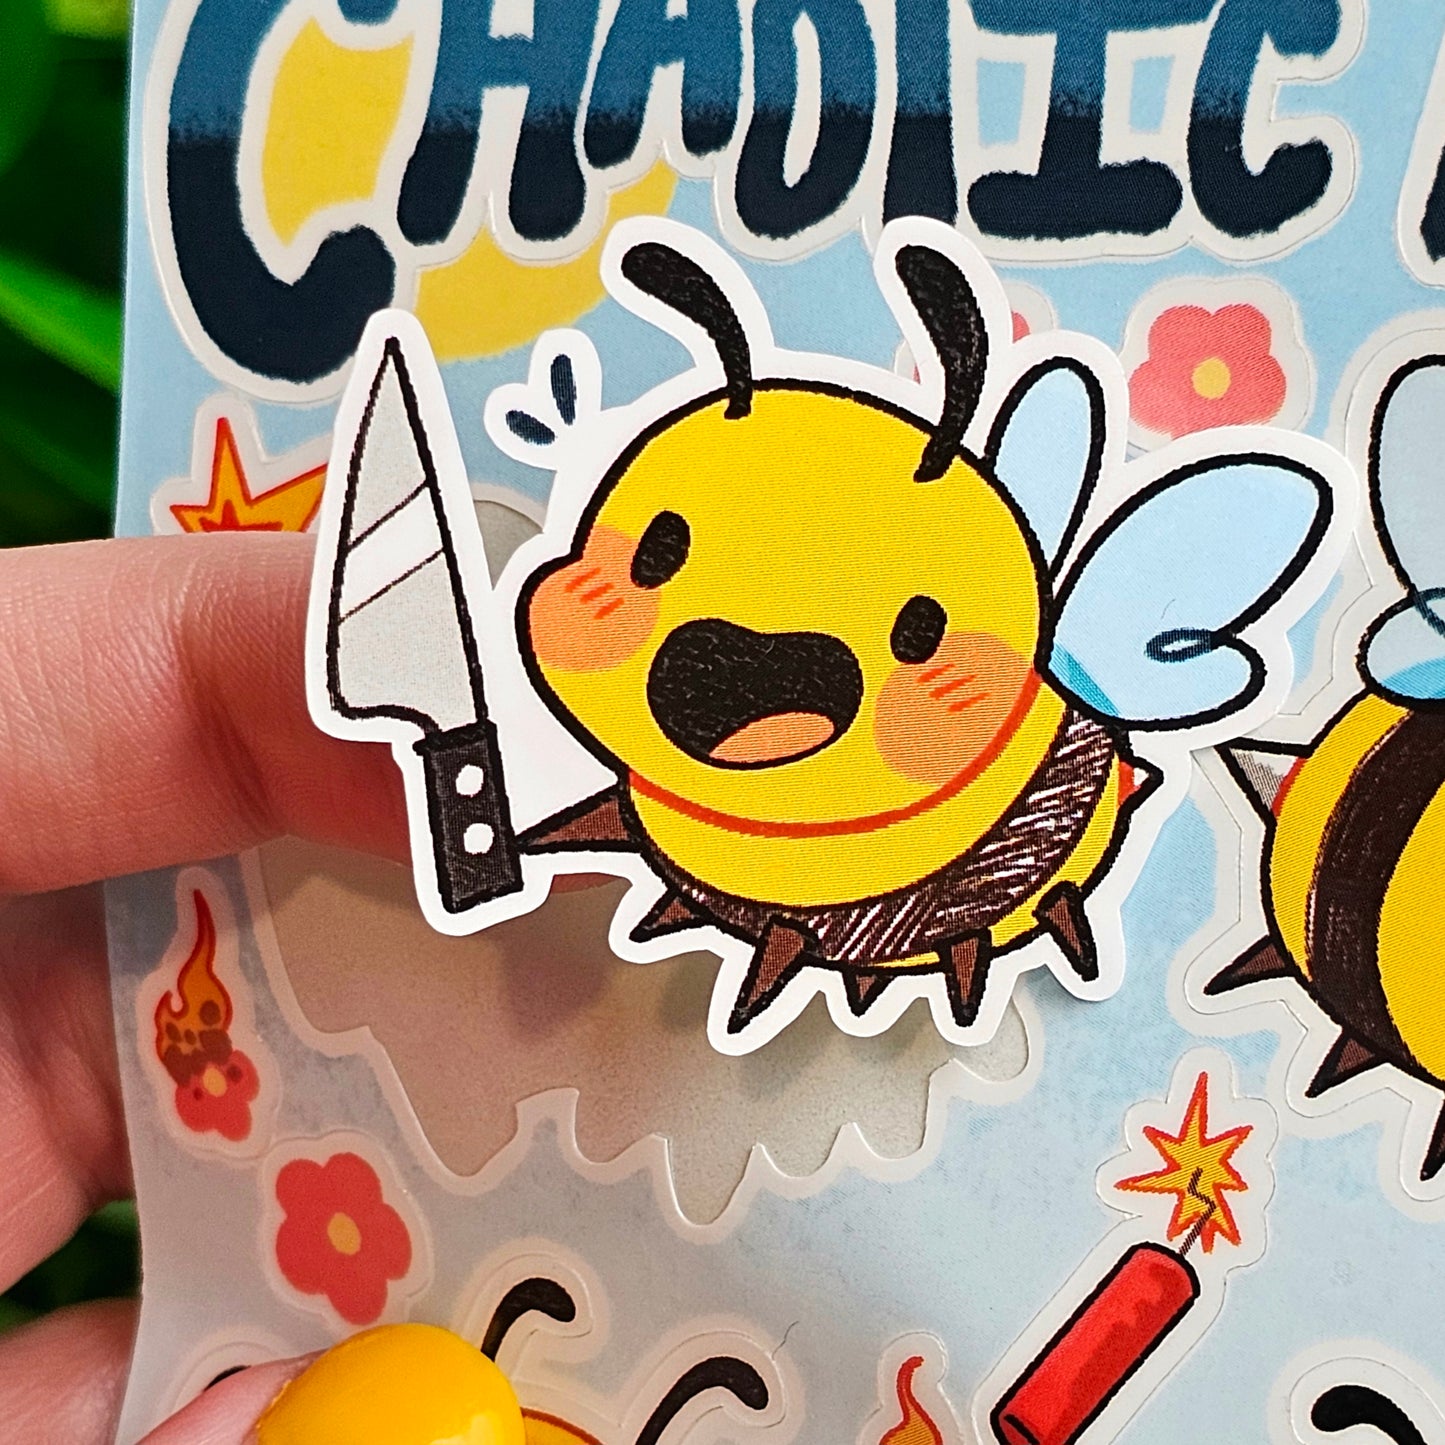 Chaotic Bees Sticker Sheet